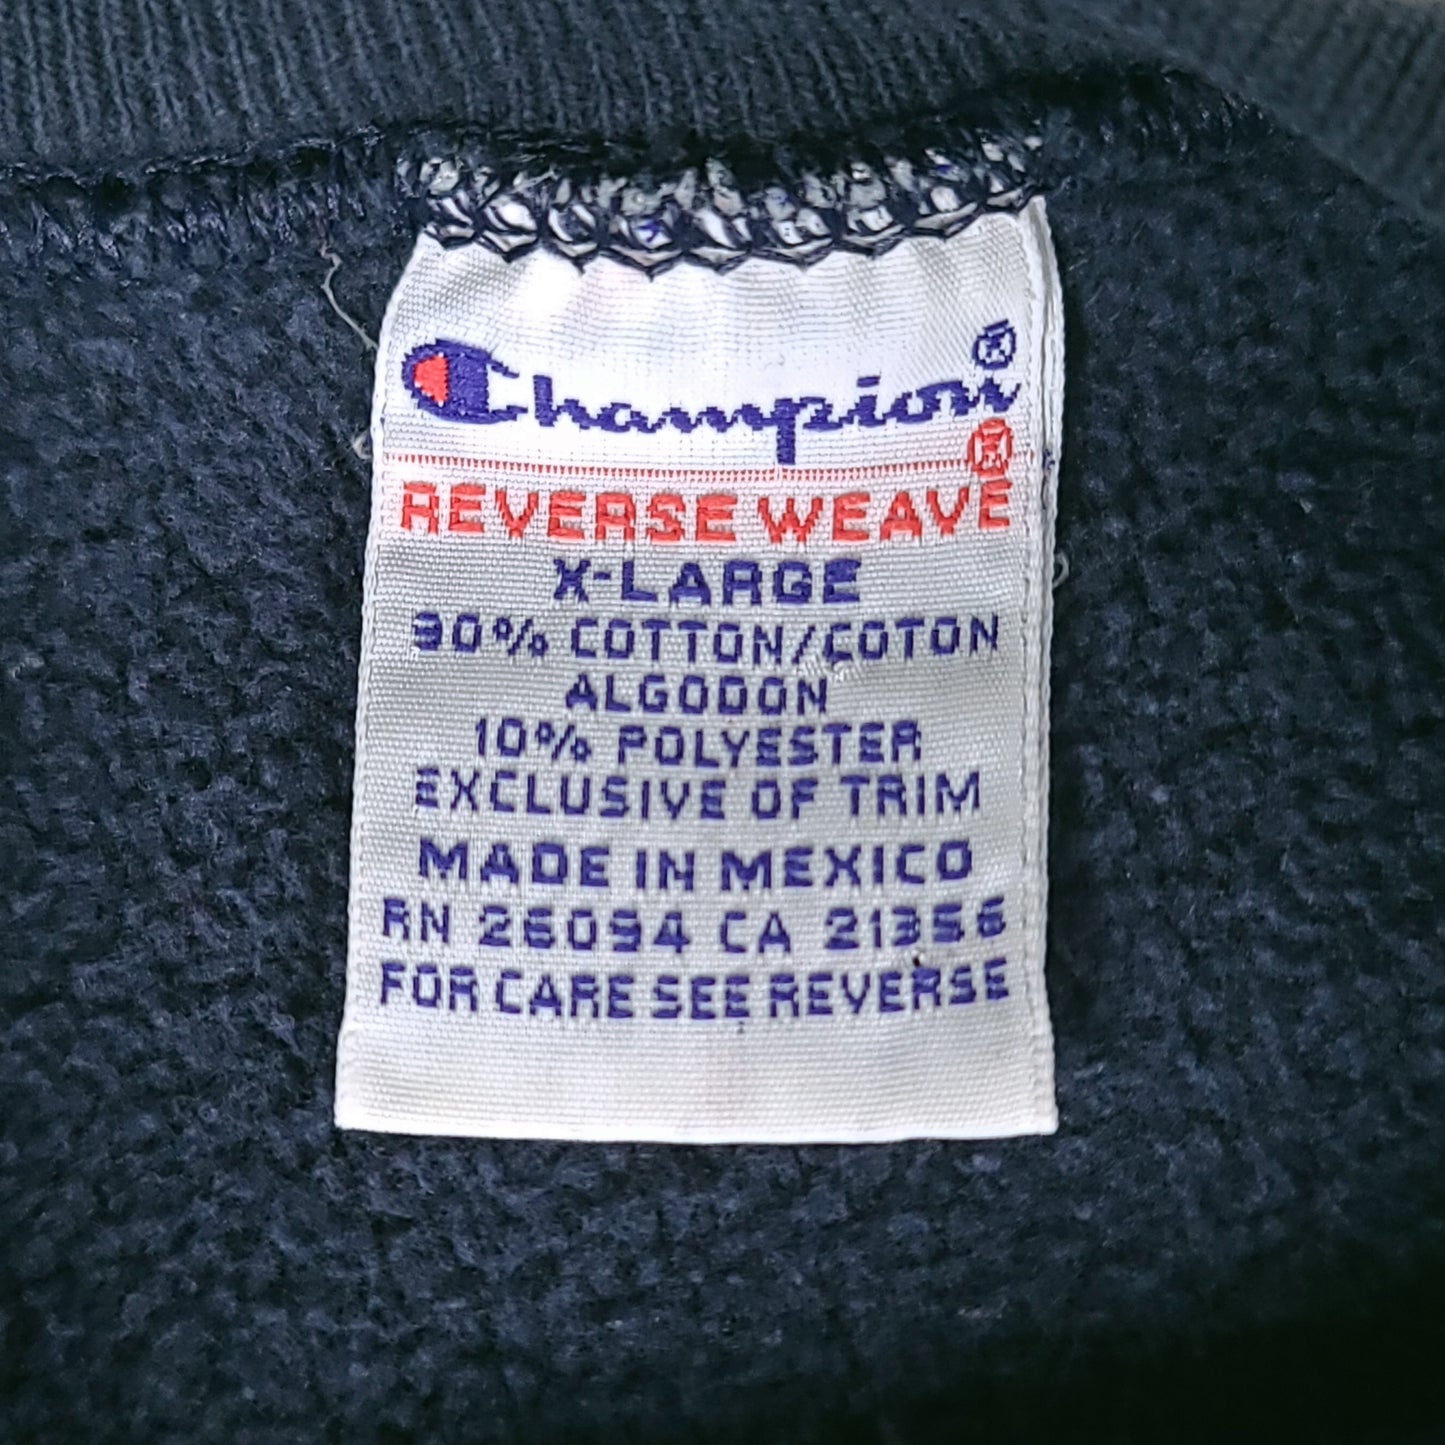 Vintage 1994 Iowa Navy Blue Champion Reverse Weave Sweatshirt